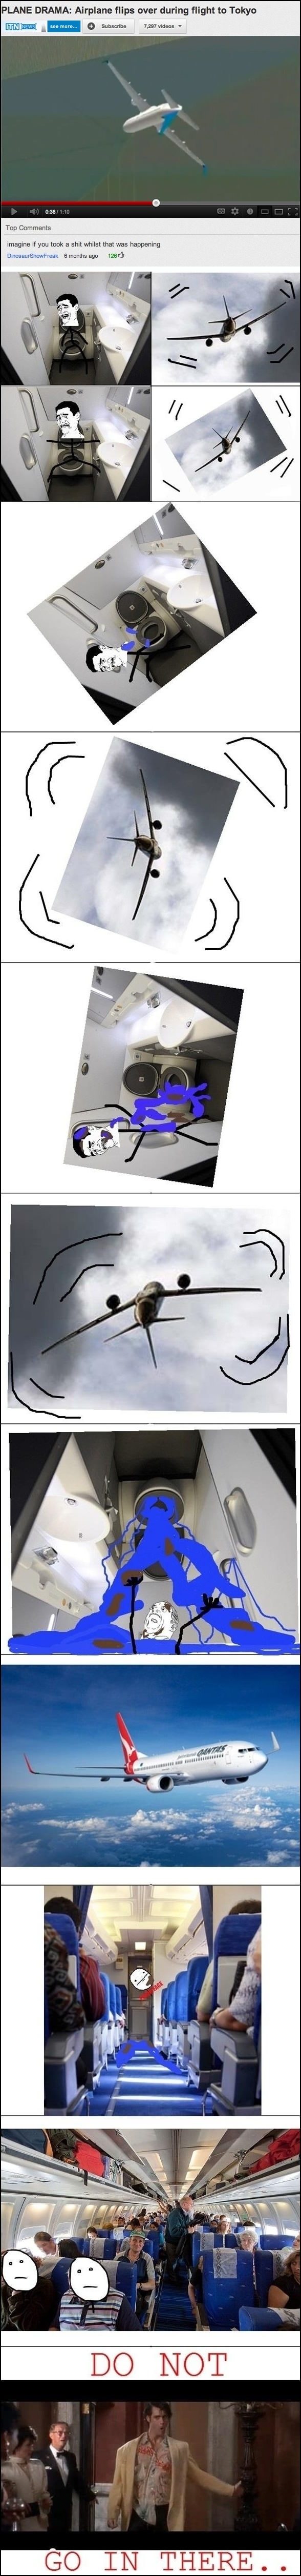 Plane Drama